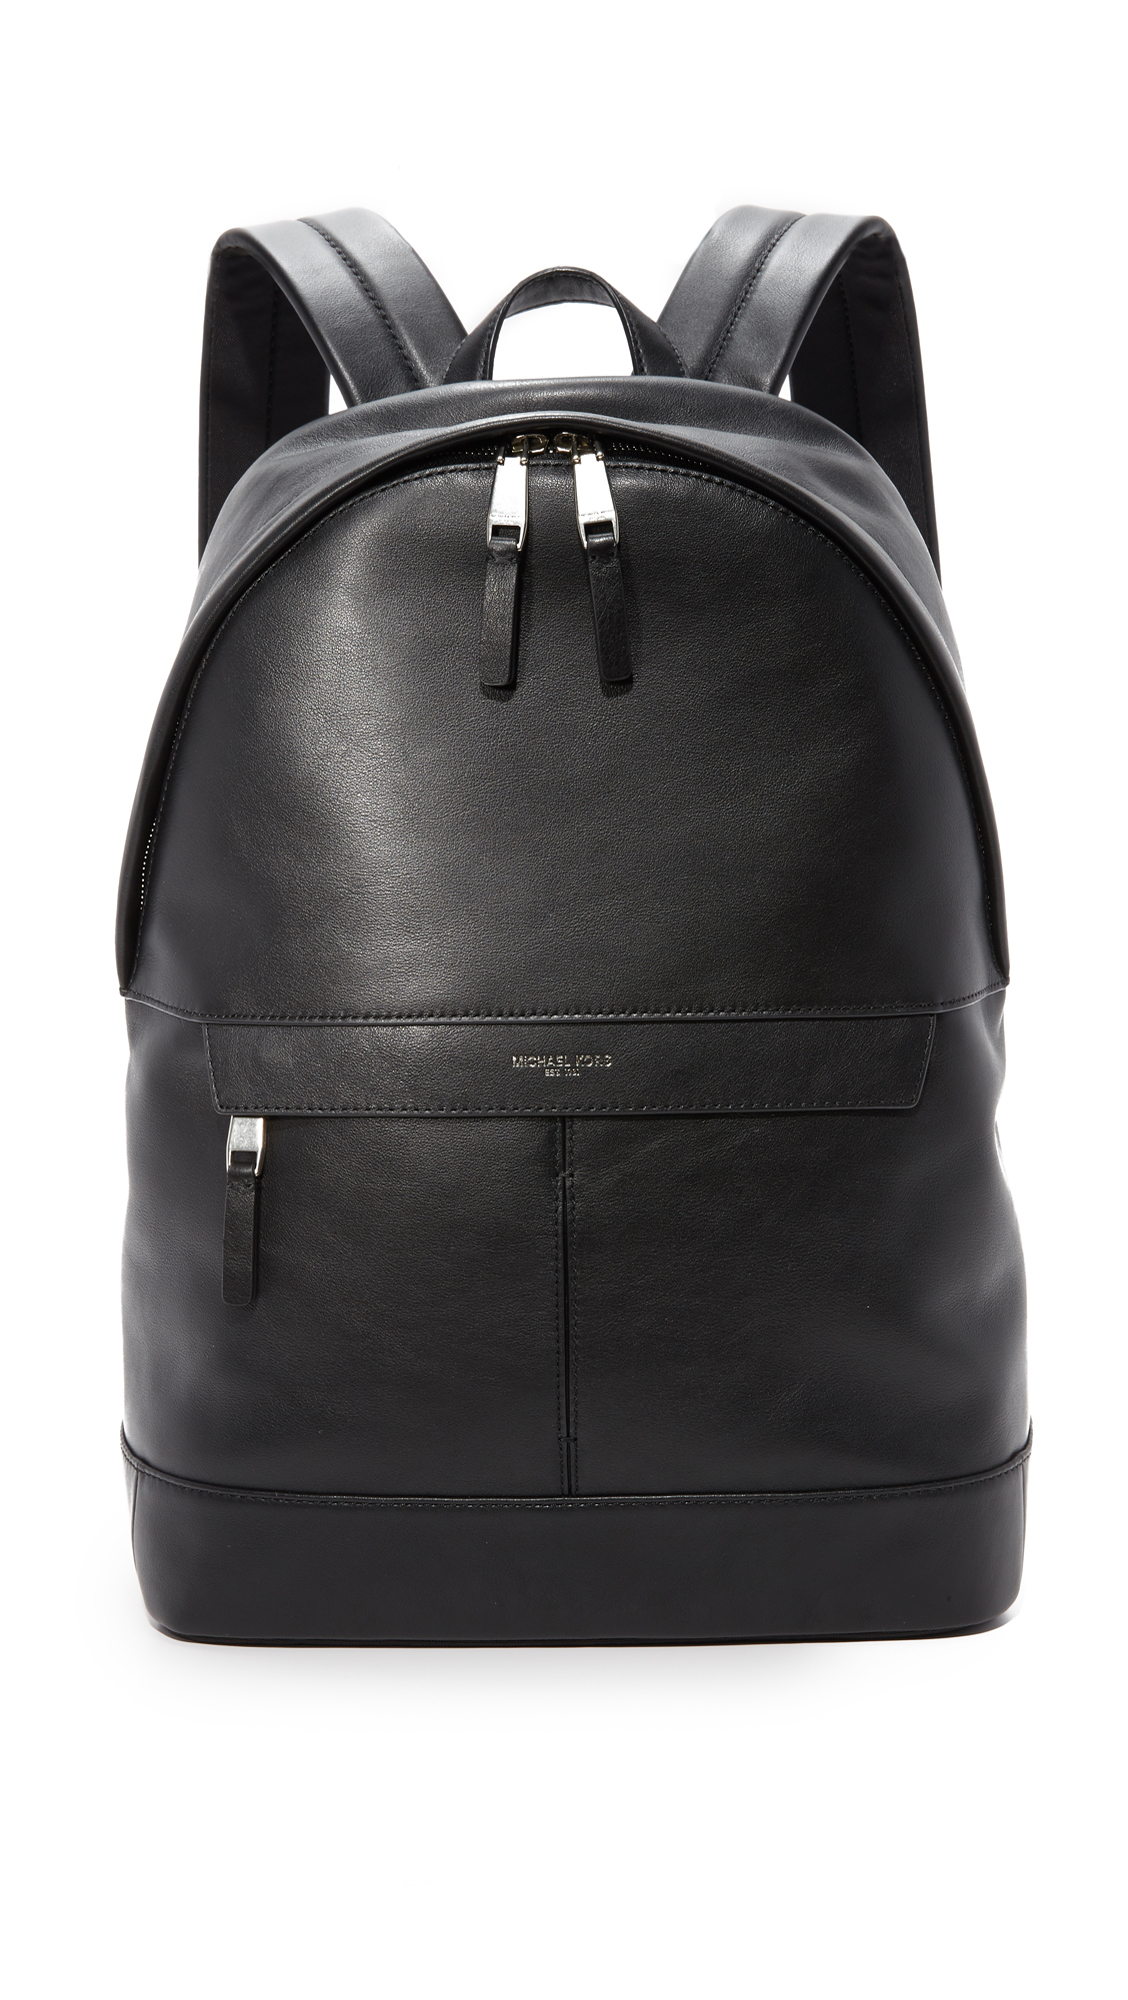 Lyst - Michael Kors Owen Leather Backpack in Black for Men